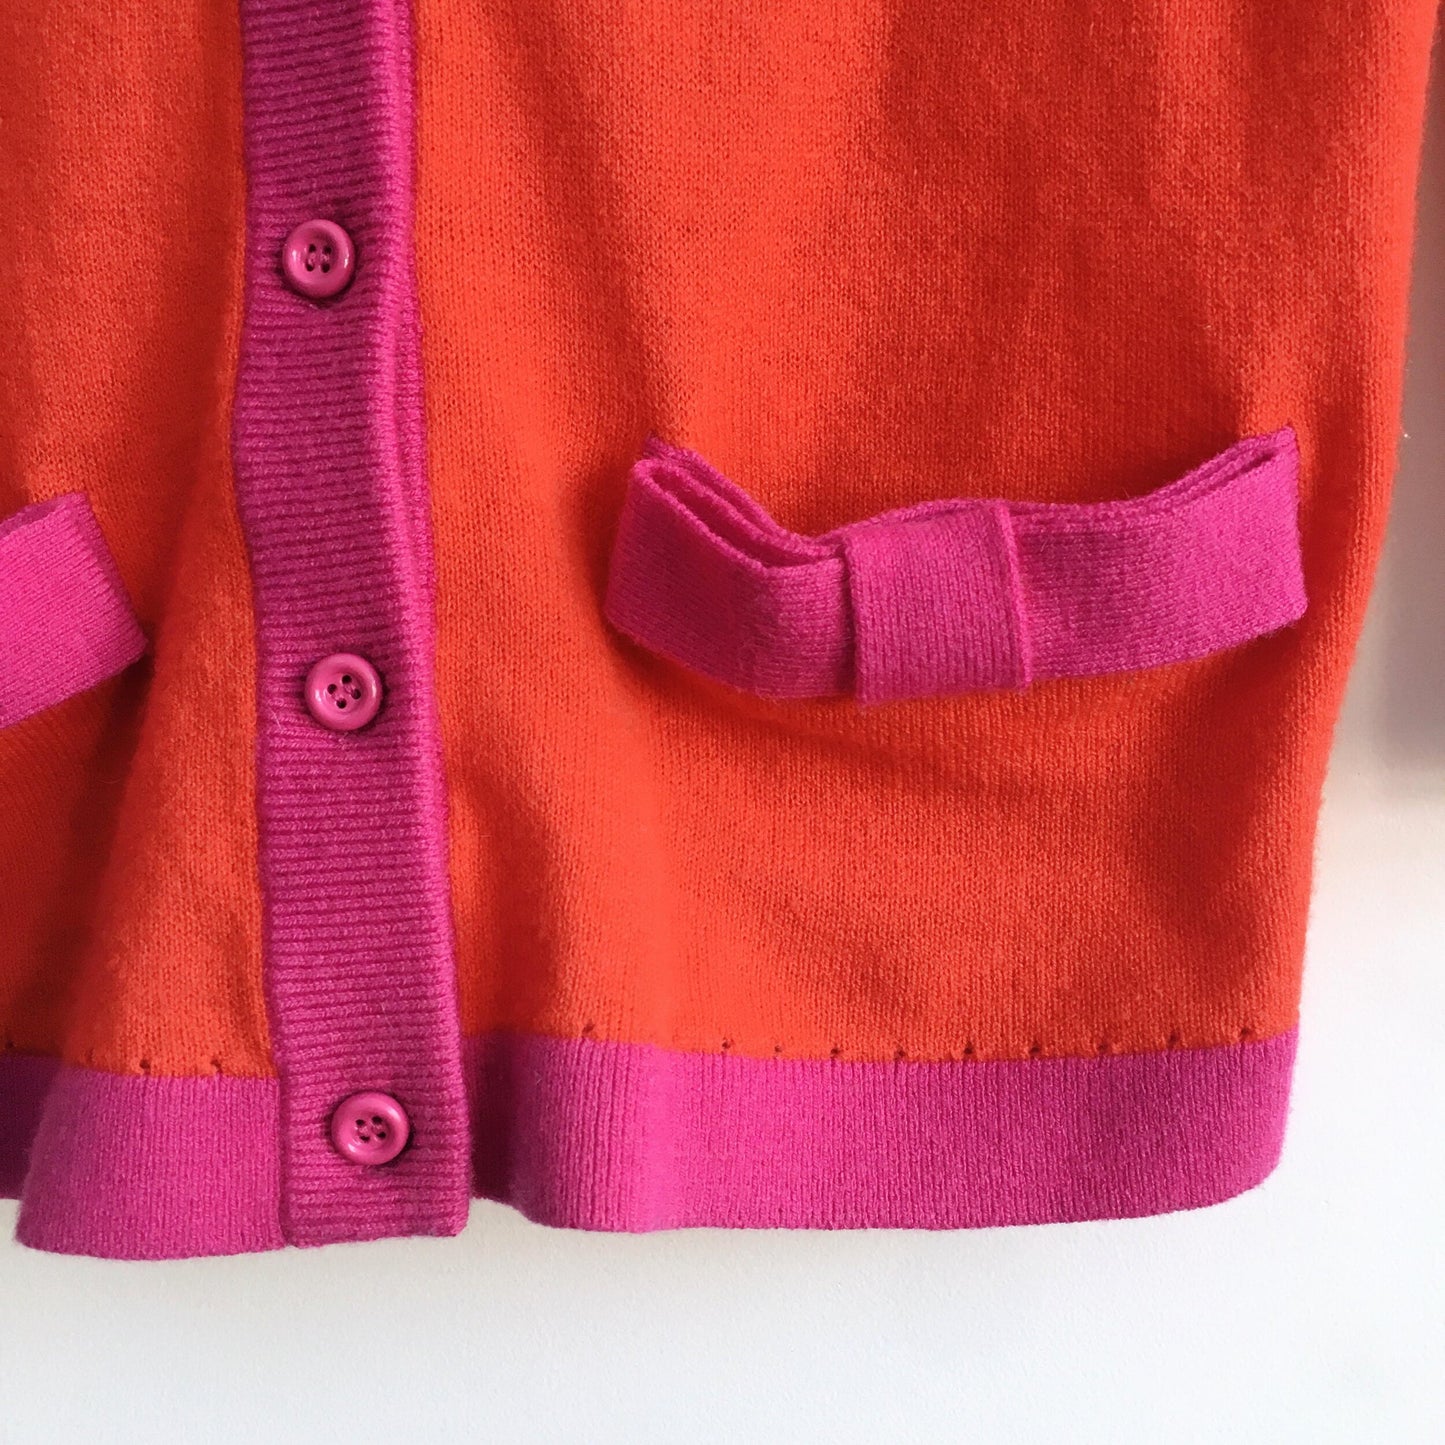 Kate Spade cashmere-blend cardigan - size xs